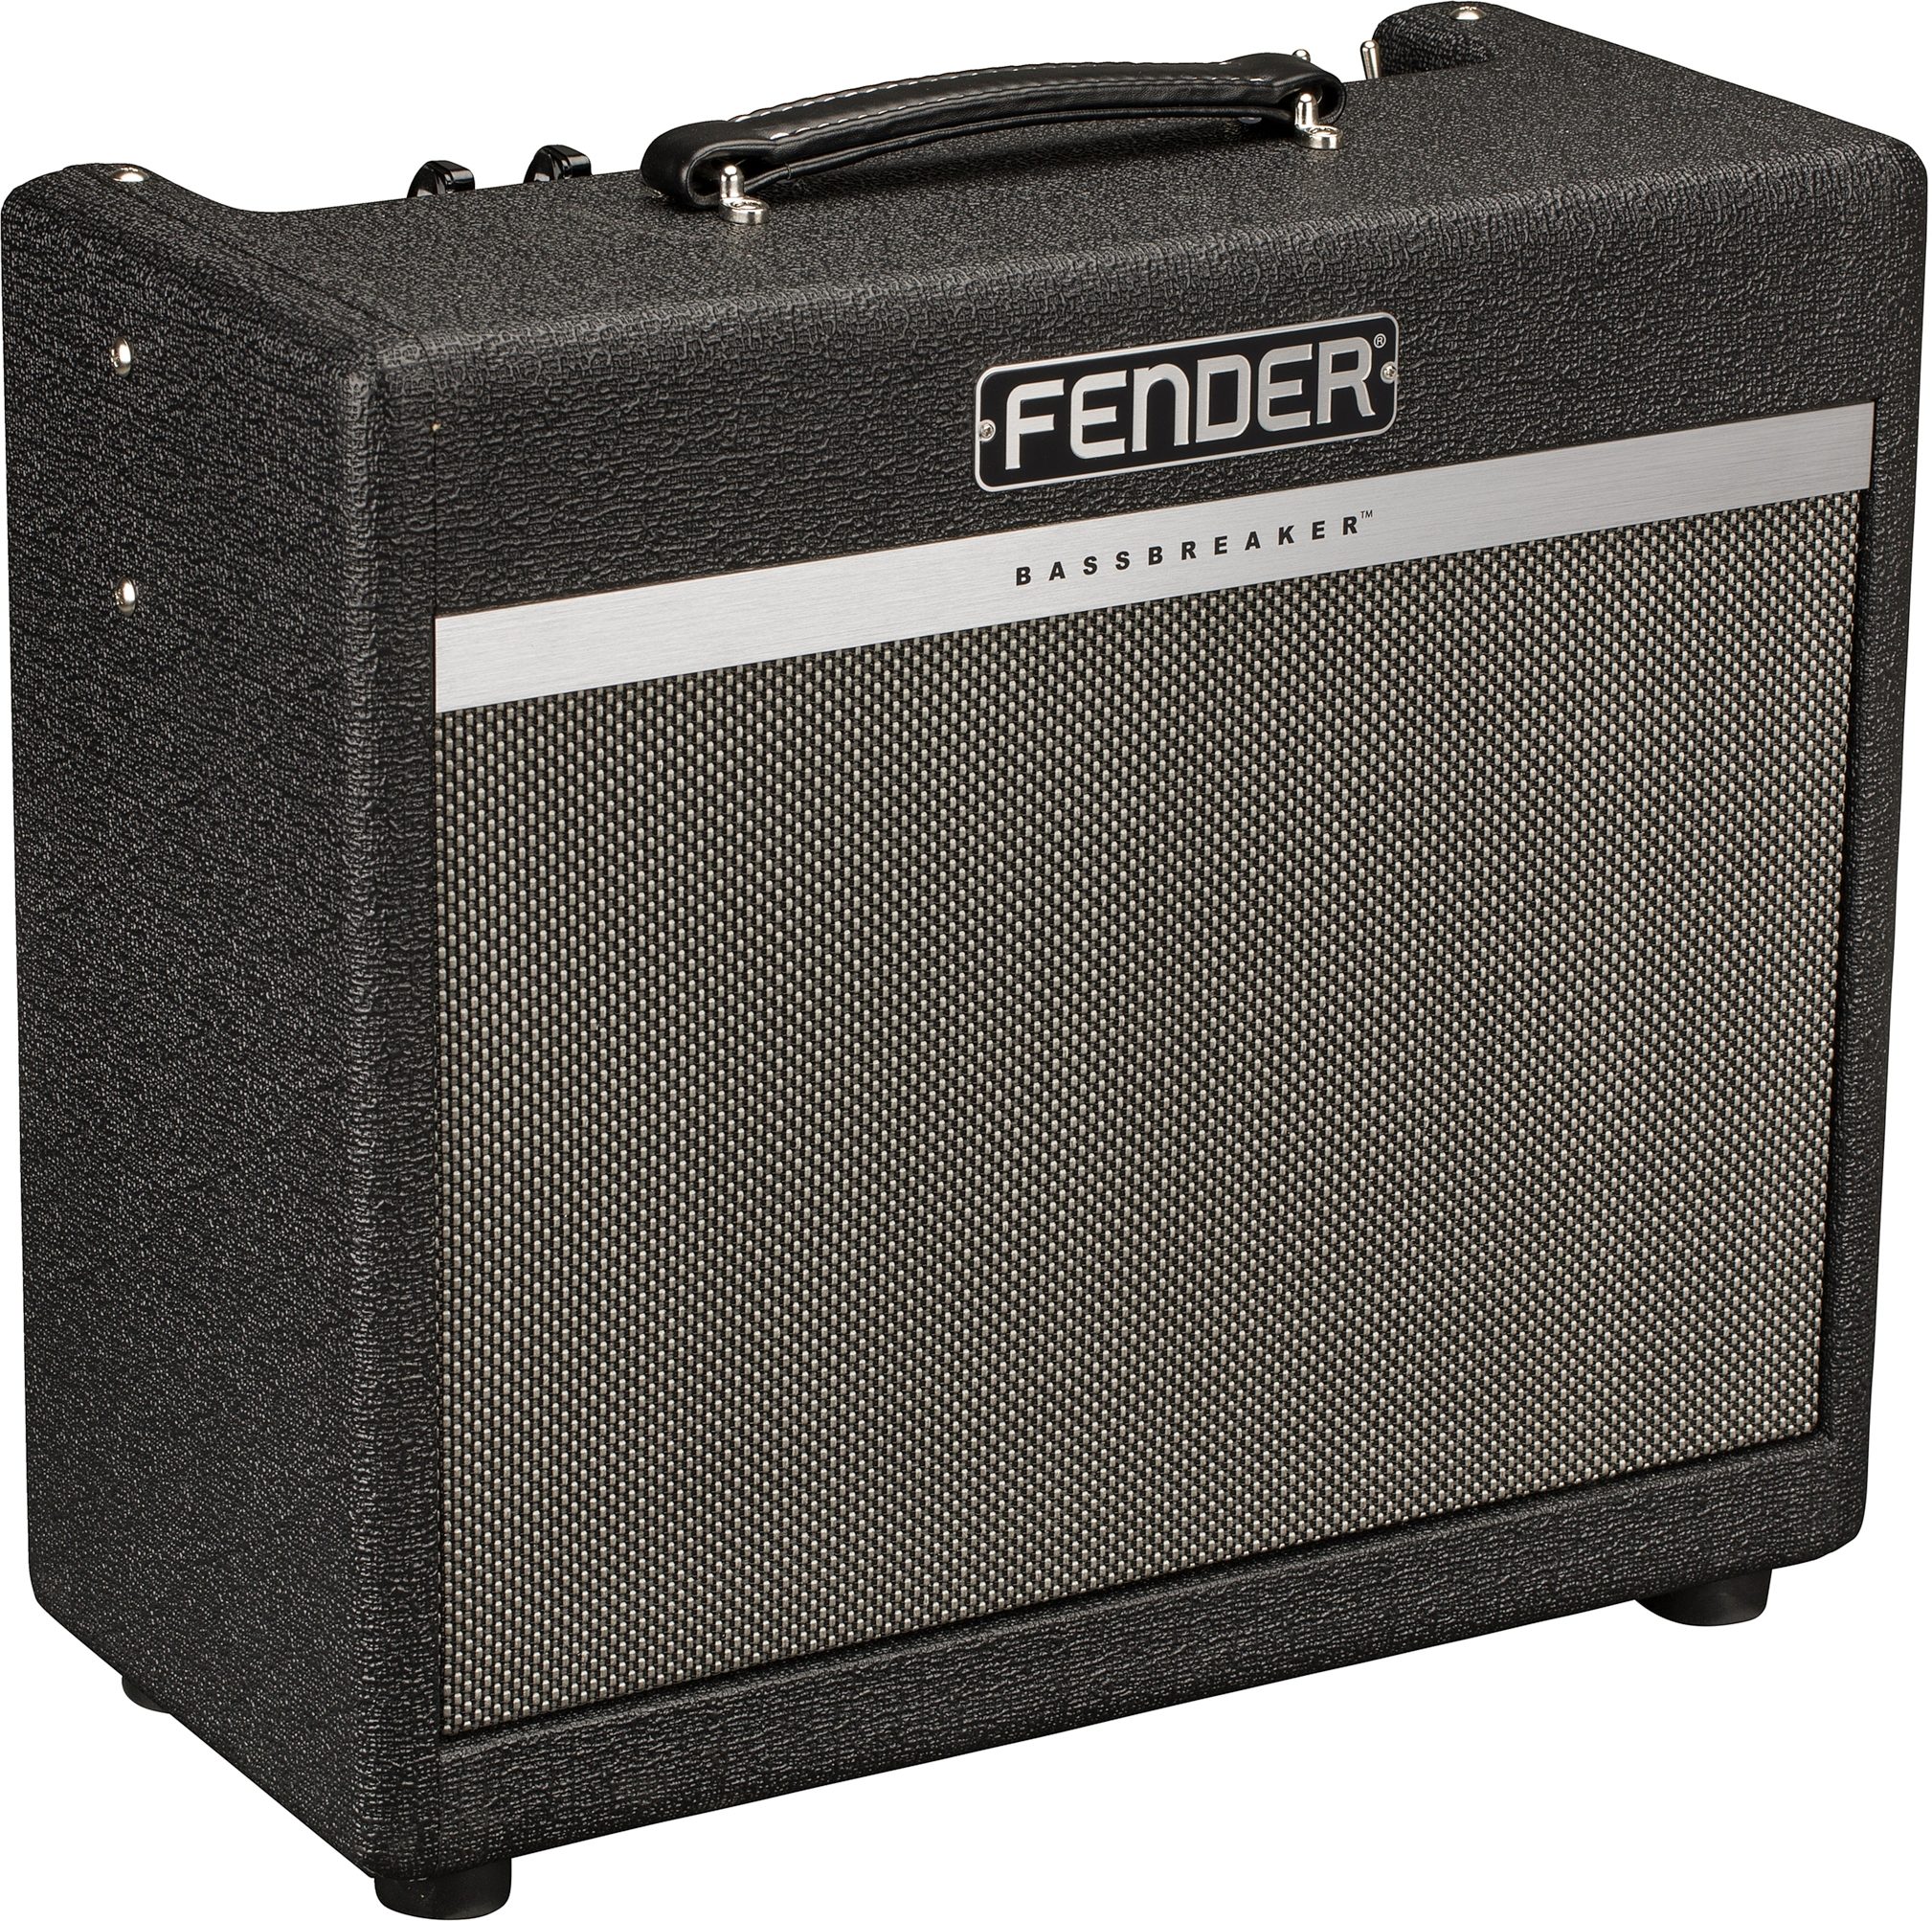 Fender Bassbreaker 15 Guitar Combo Amplifier (15 Watts, 1x12